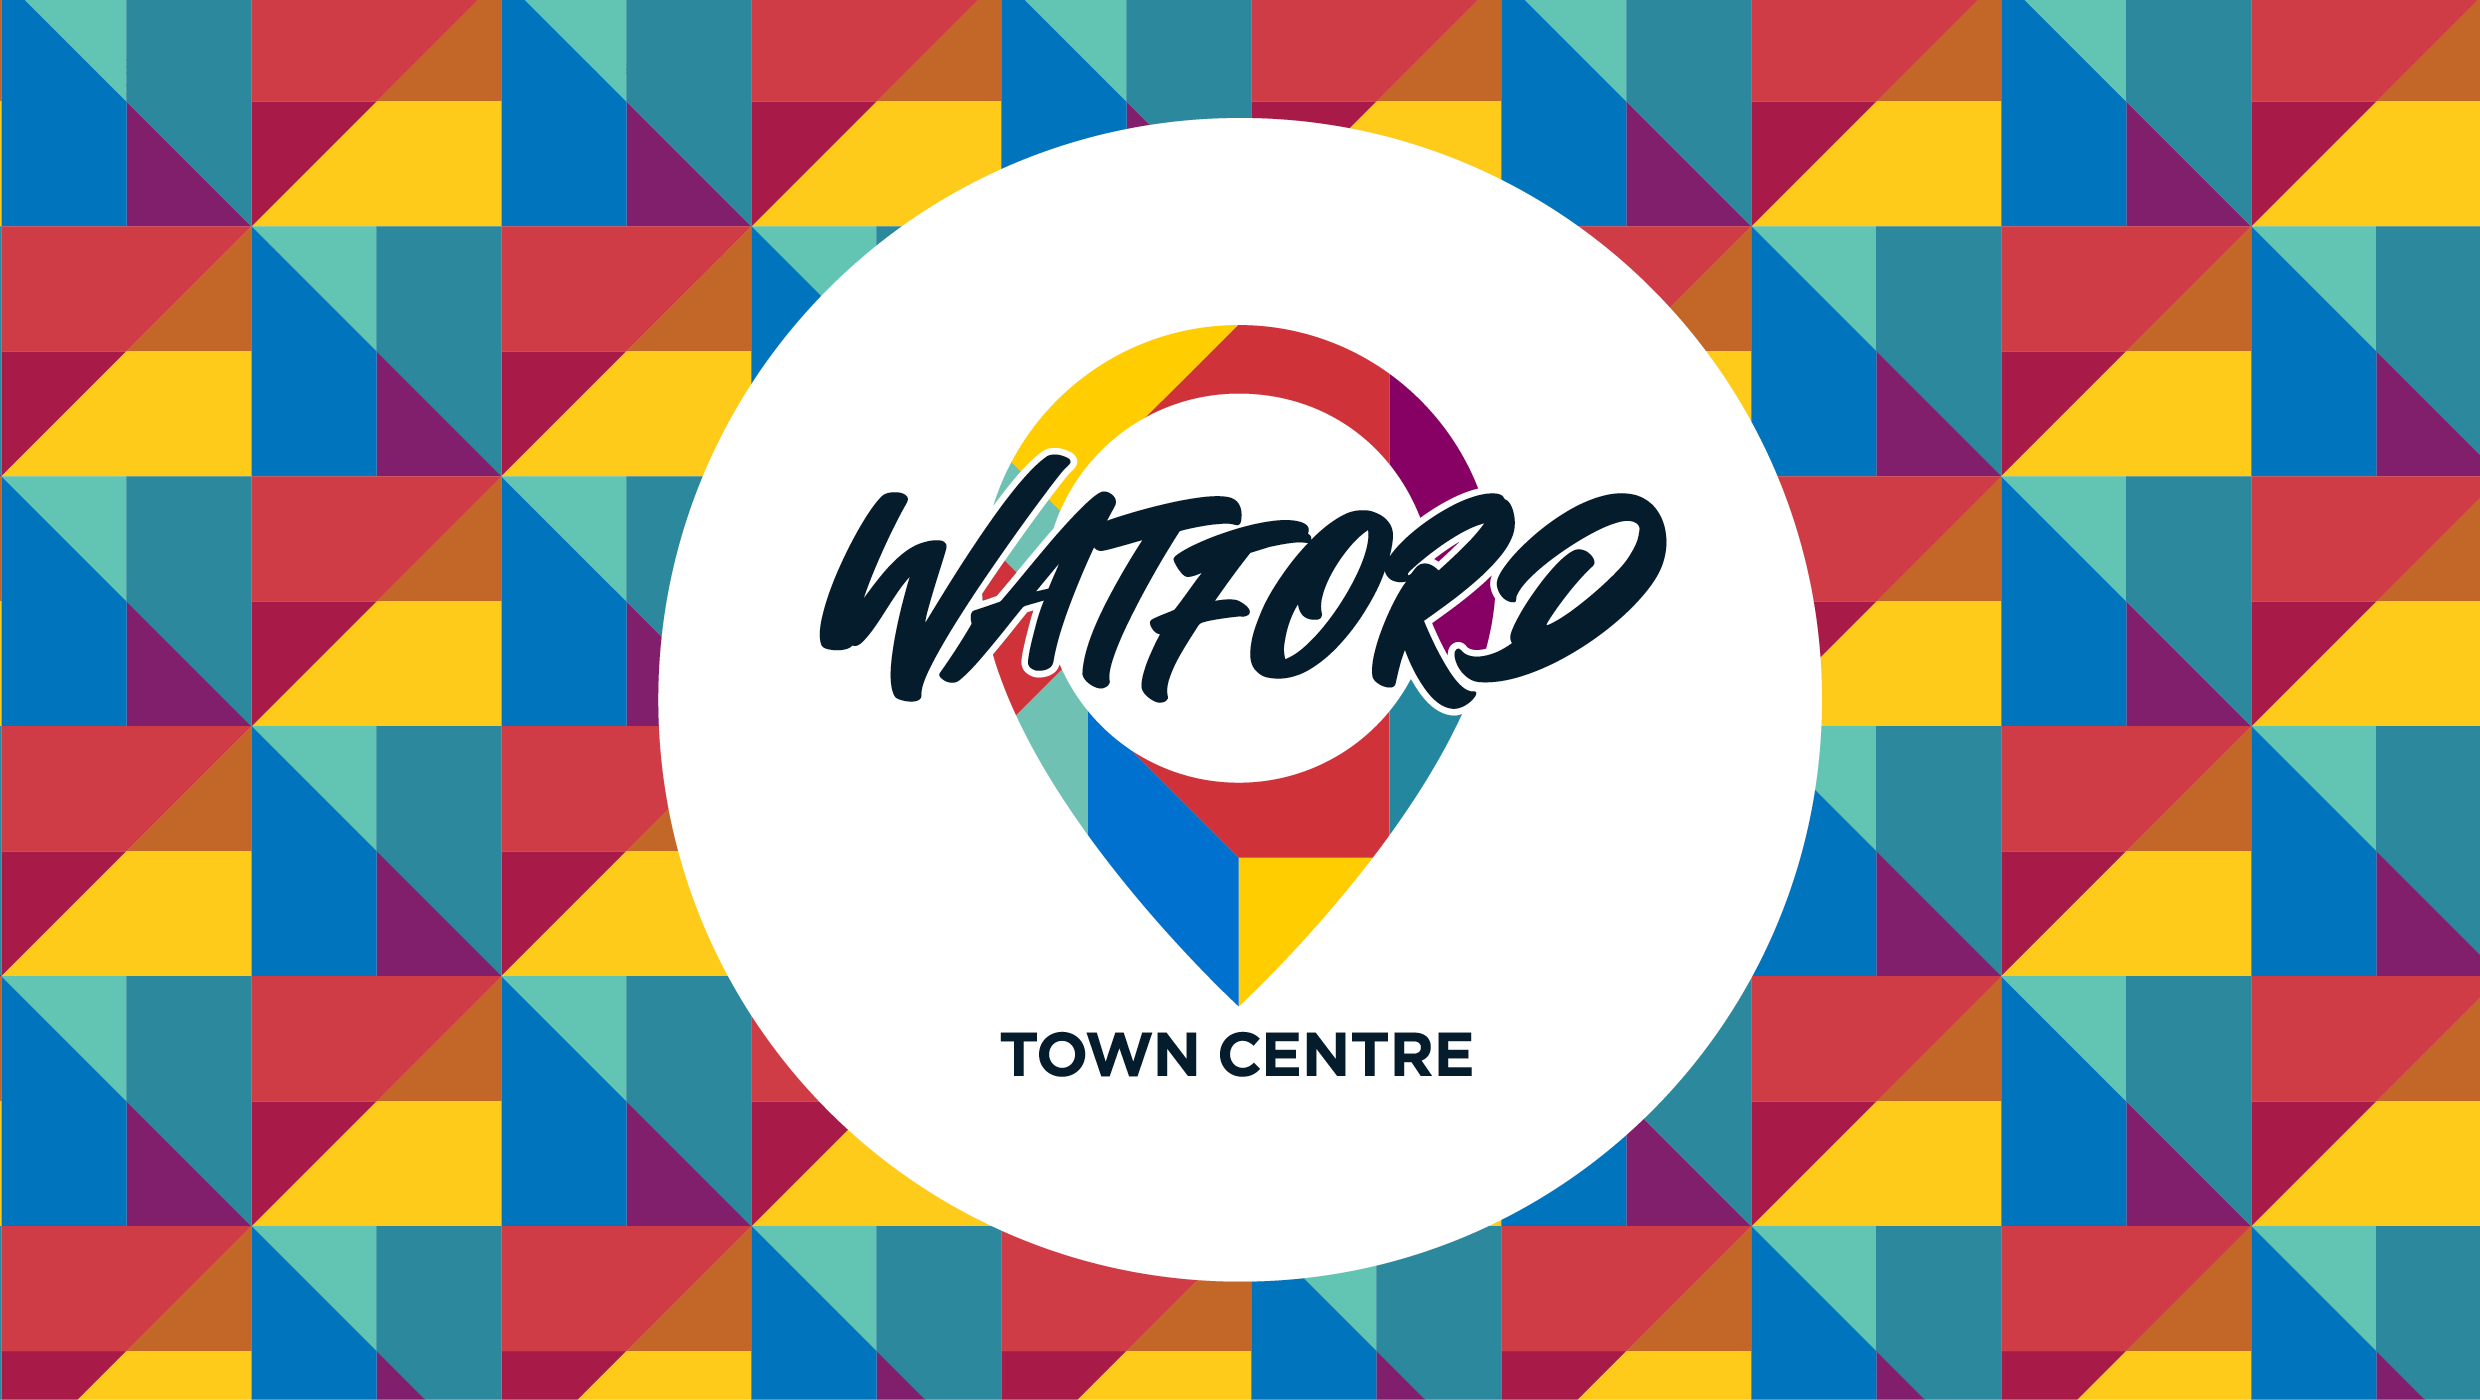 We rebranded Watford Town Centre